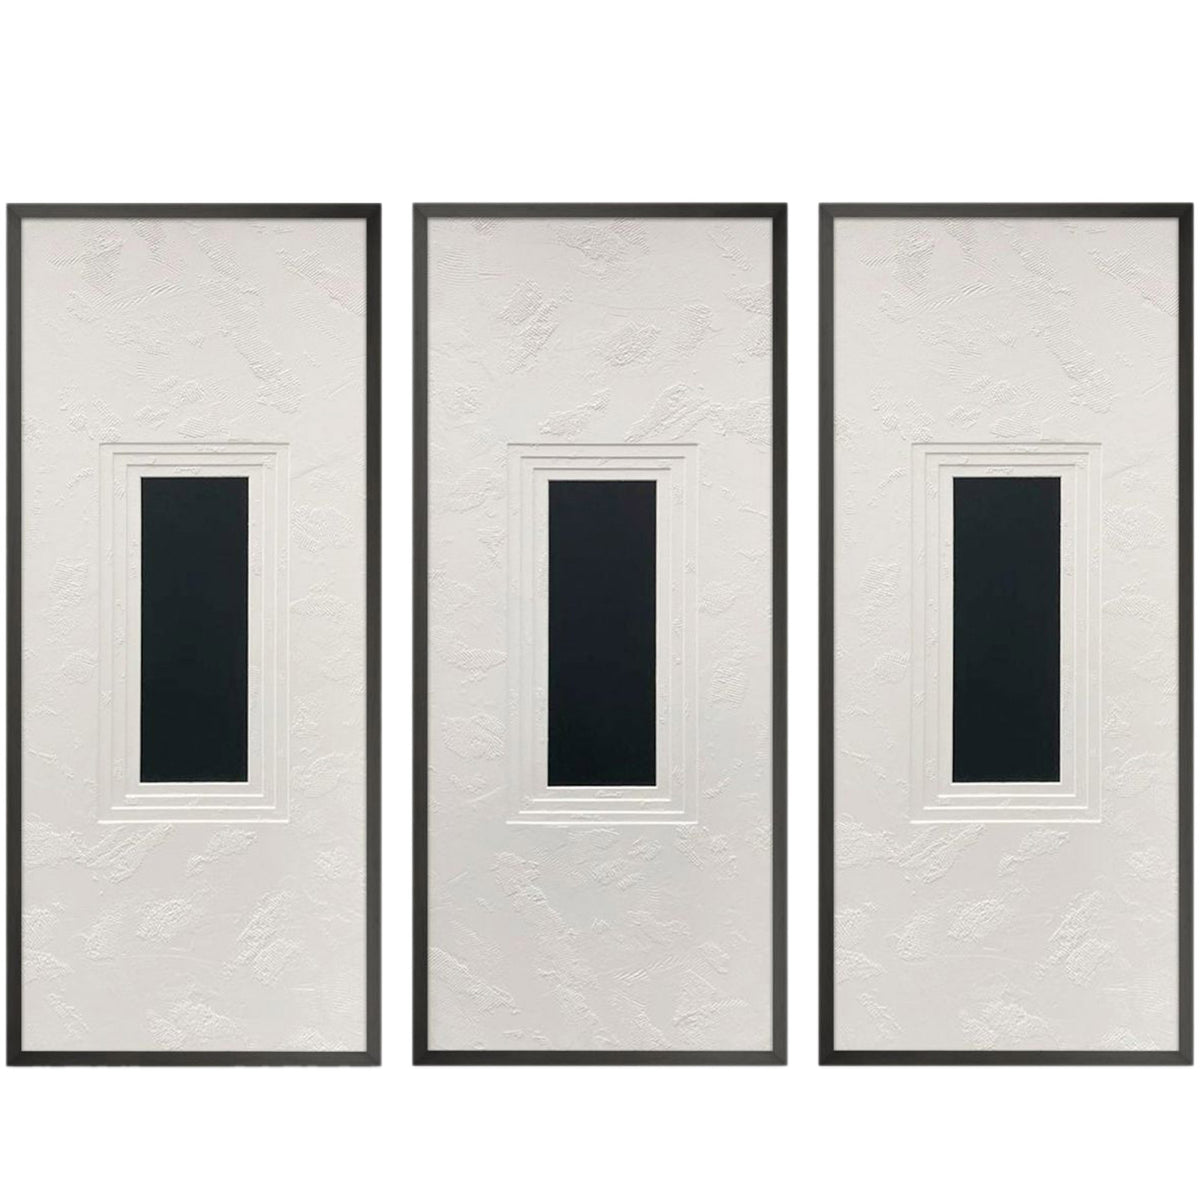 Sayce Textured Paper Frames, Set of 3